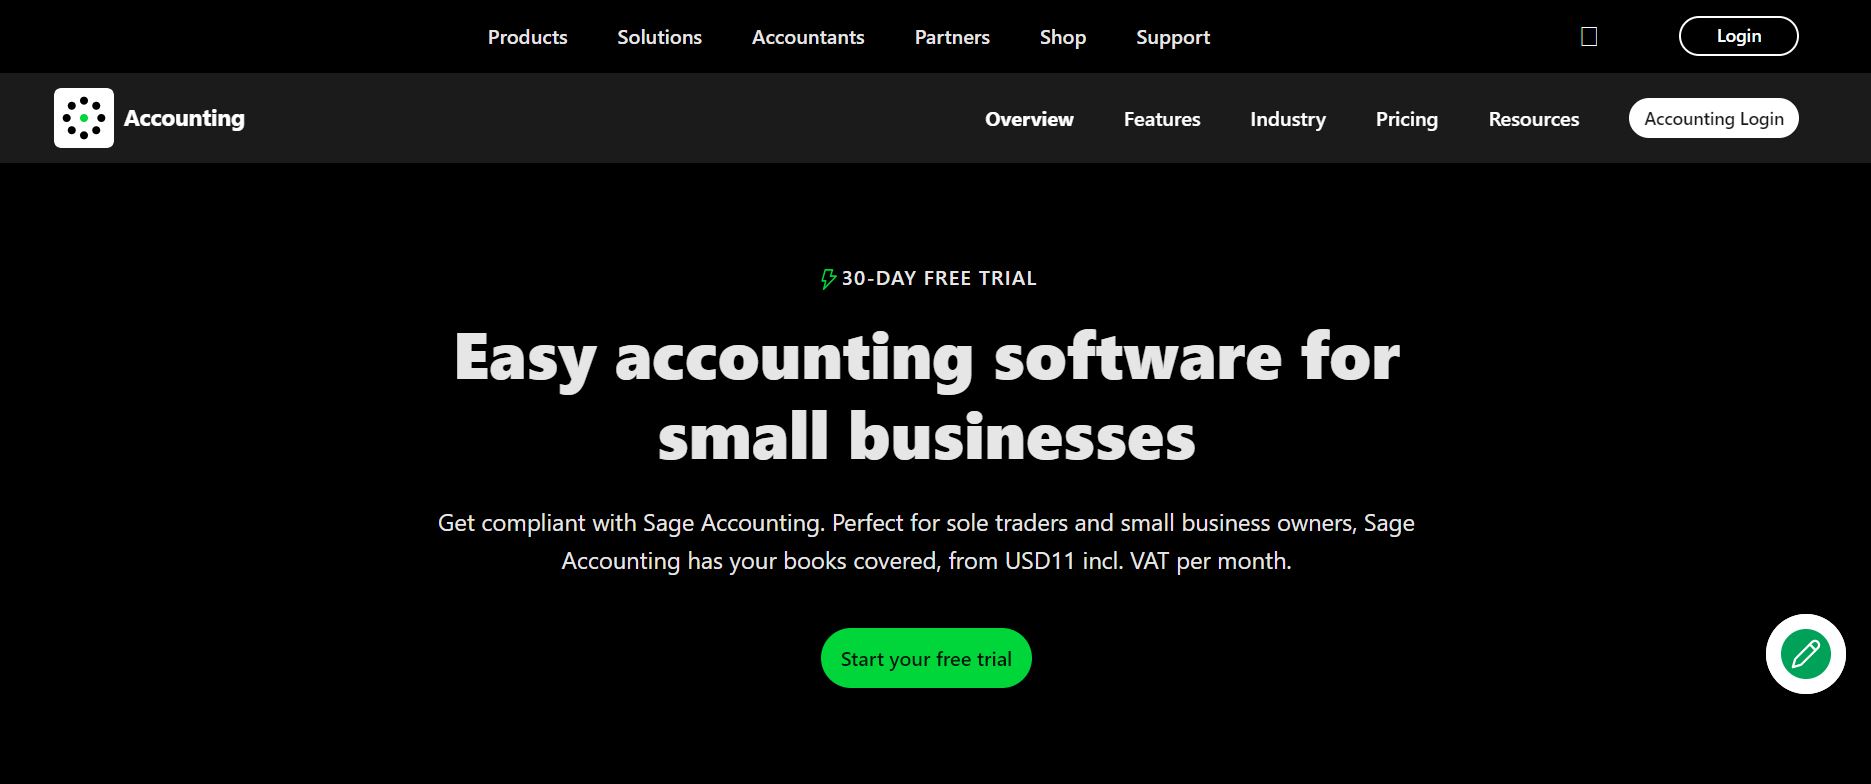 Sage Accounting homepage